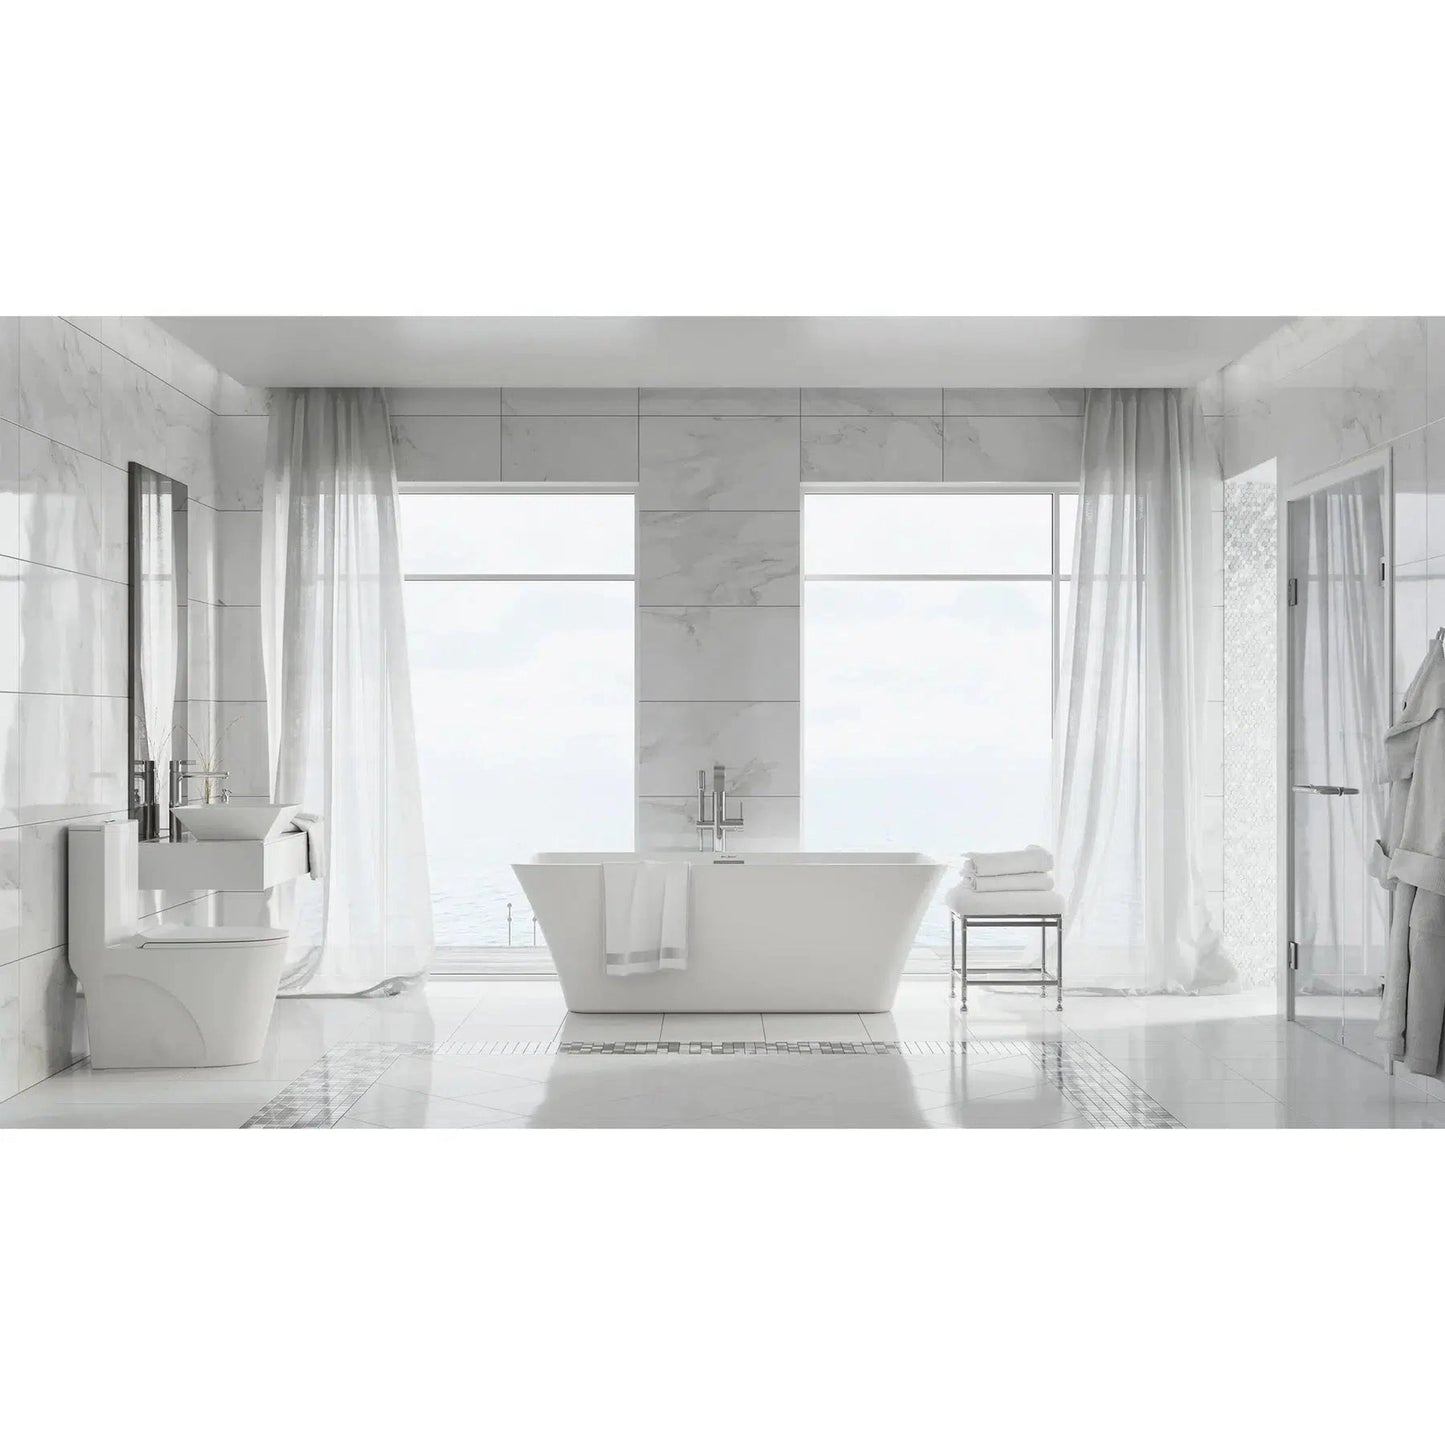 Swiss Madison St Tropez 16" x 16" White Square Ceramic Bathroom Vessel Sink